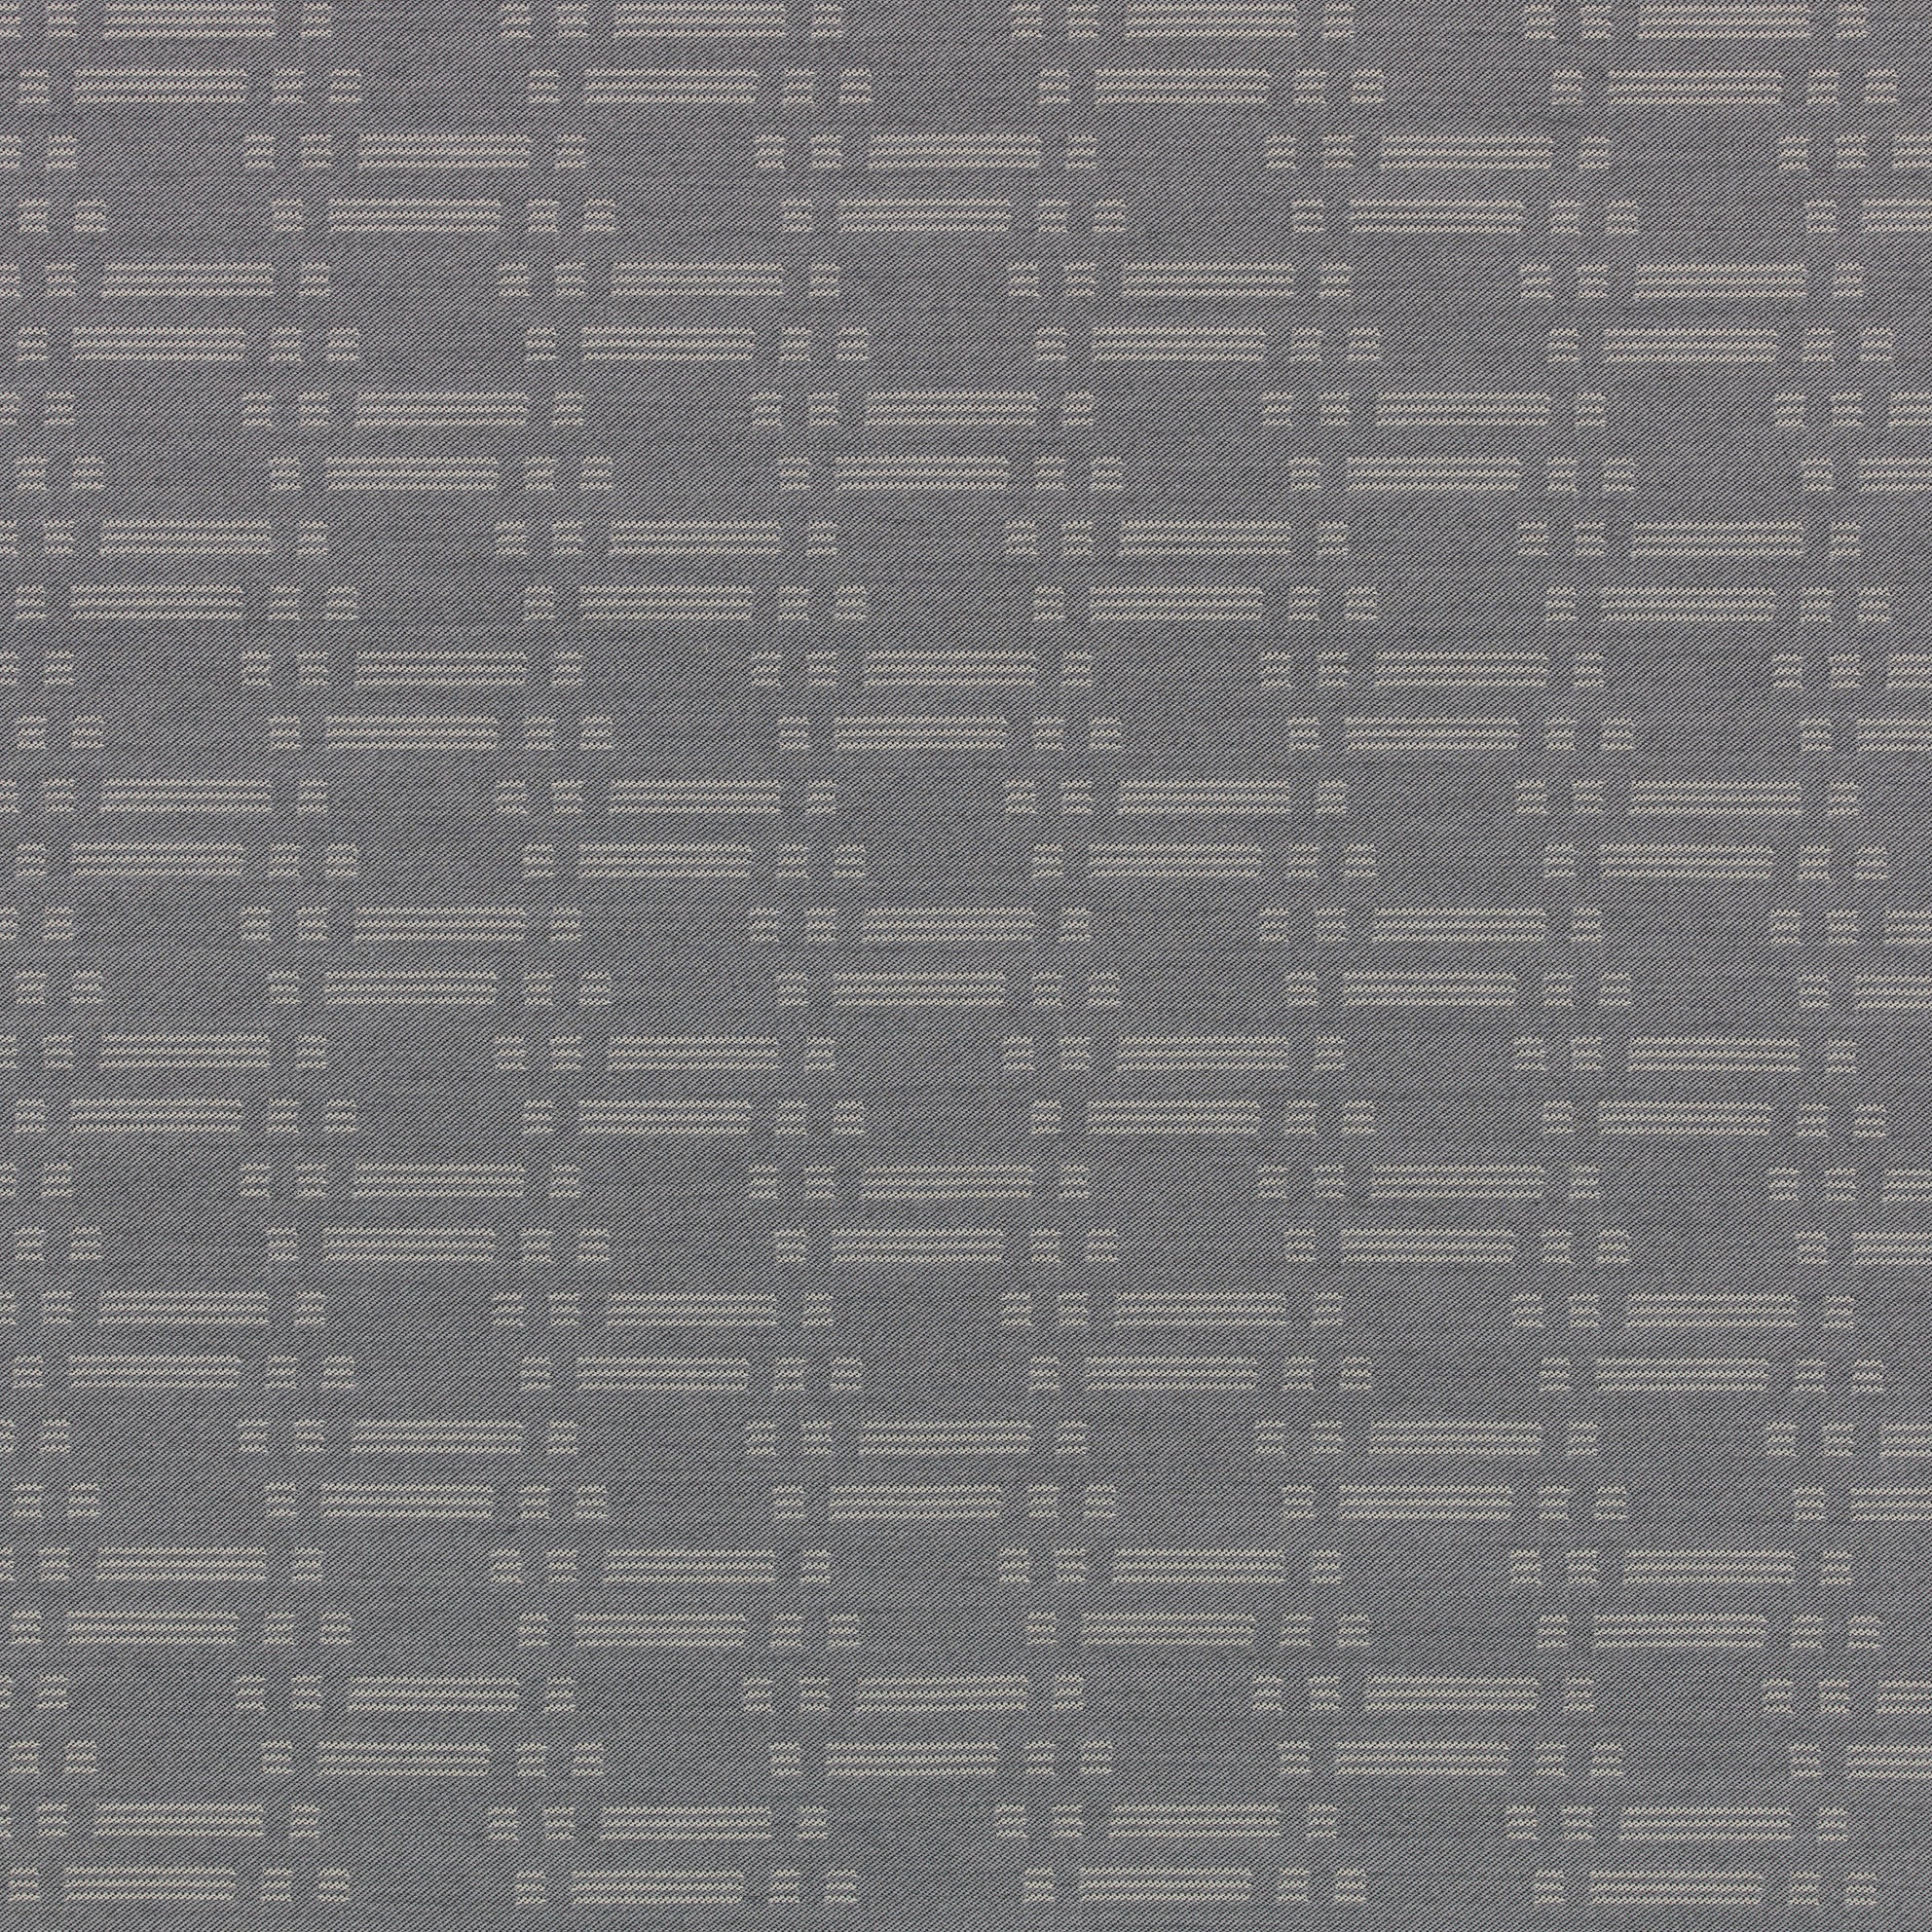 Triton Contract Furnishing Fabric - Light Grey | Nicholas Engert Interiors